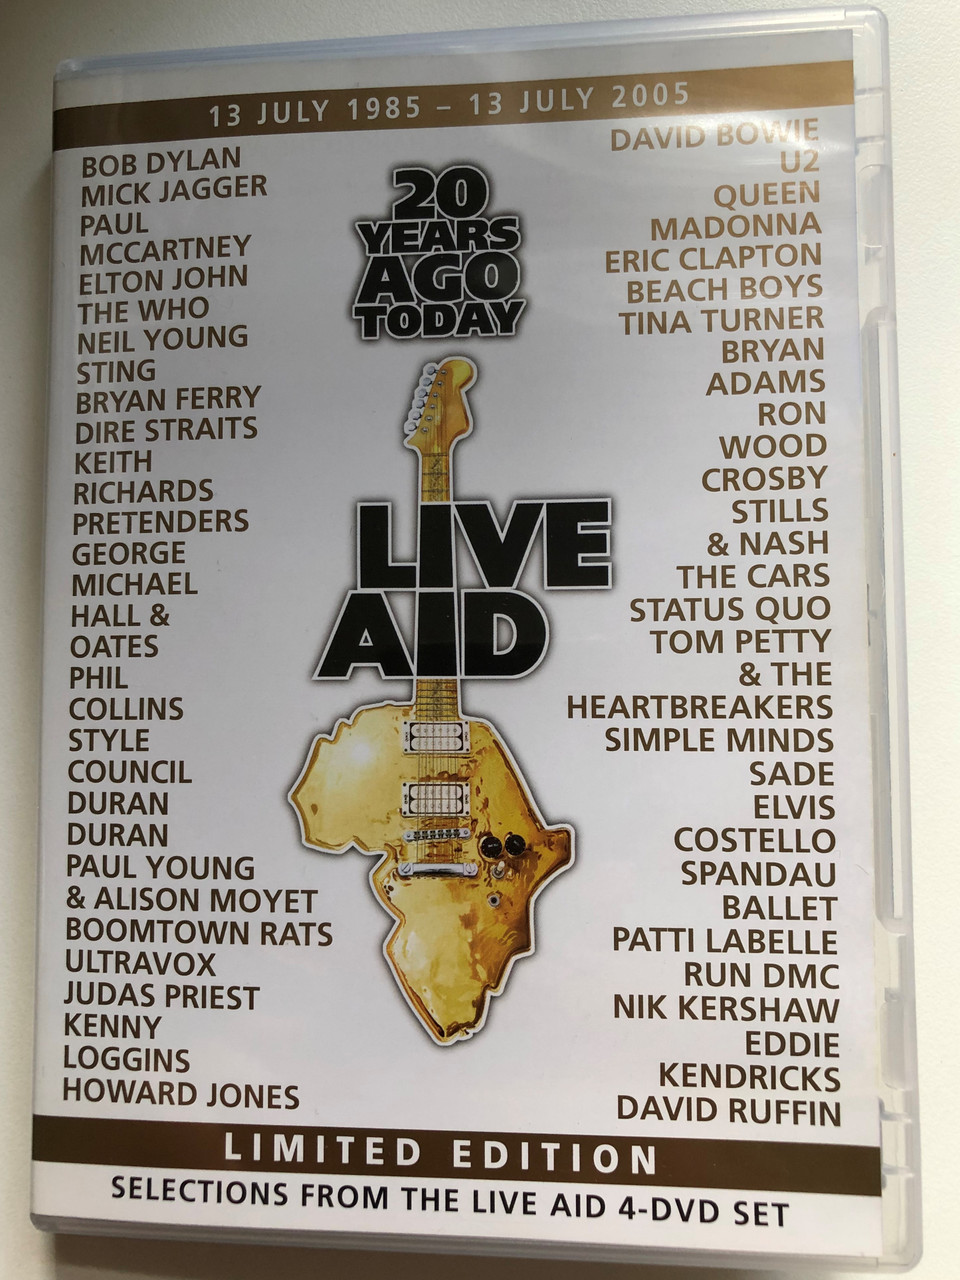 Live Aid-20 Years Ago Today / DVD - bibleinmylanguage